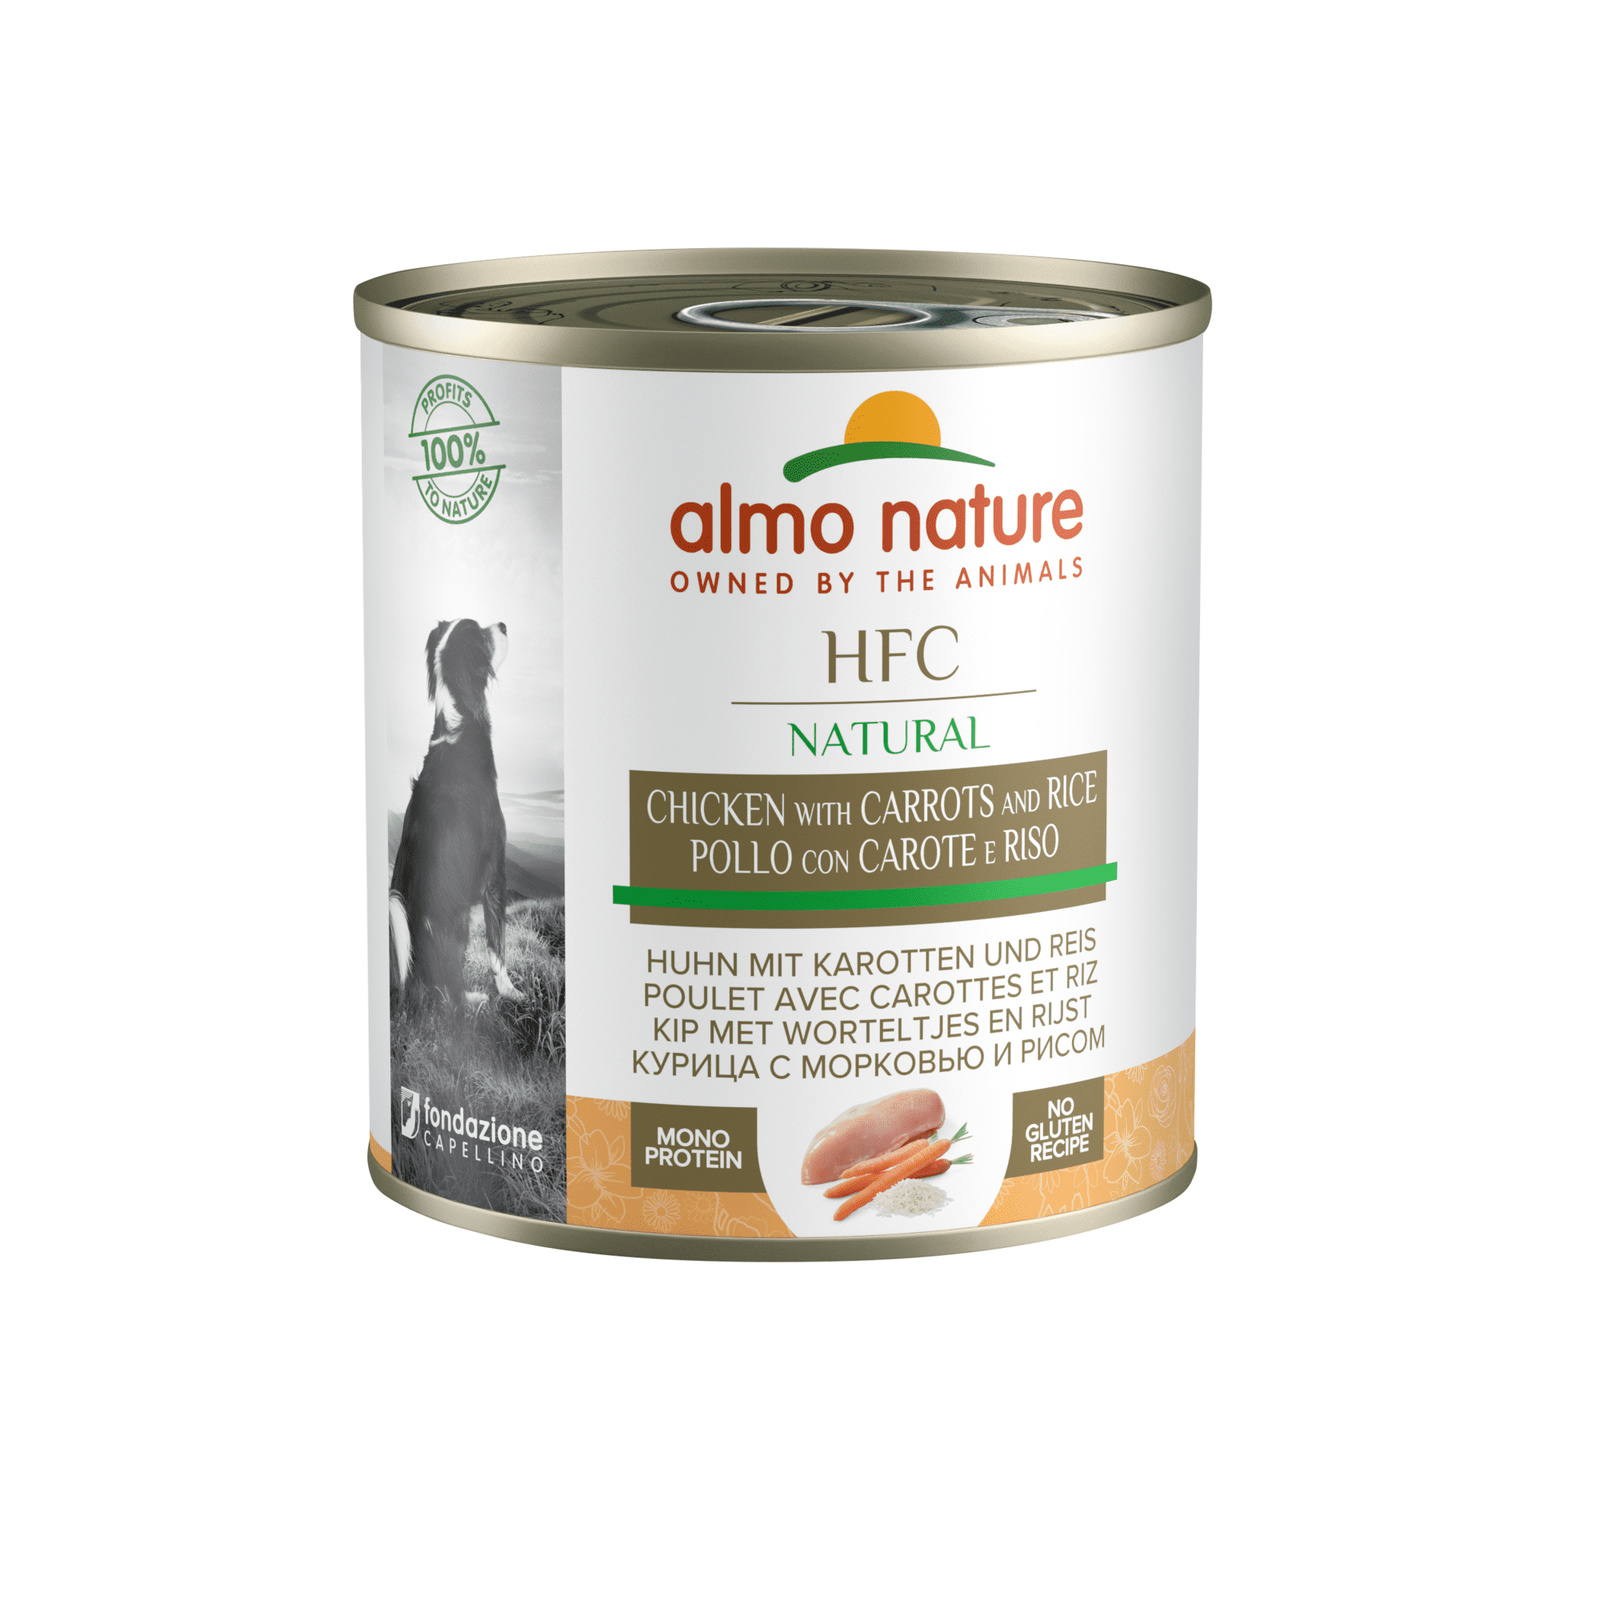 Almo Nature консервы Almo Nature консервы для собак Курица с морковью и рисом по-домашнему (280 г) almo nature консервы для собак курица с морковью и рисом по домашнему 24штx95гр 2 28кг